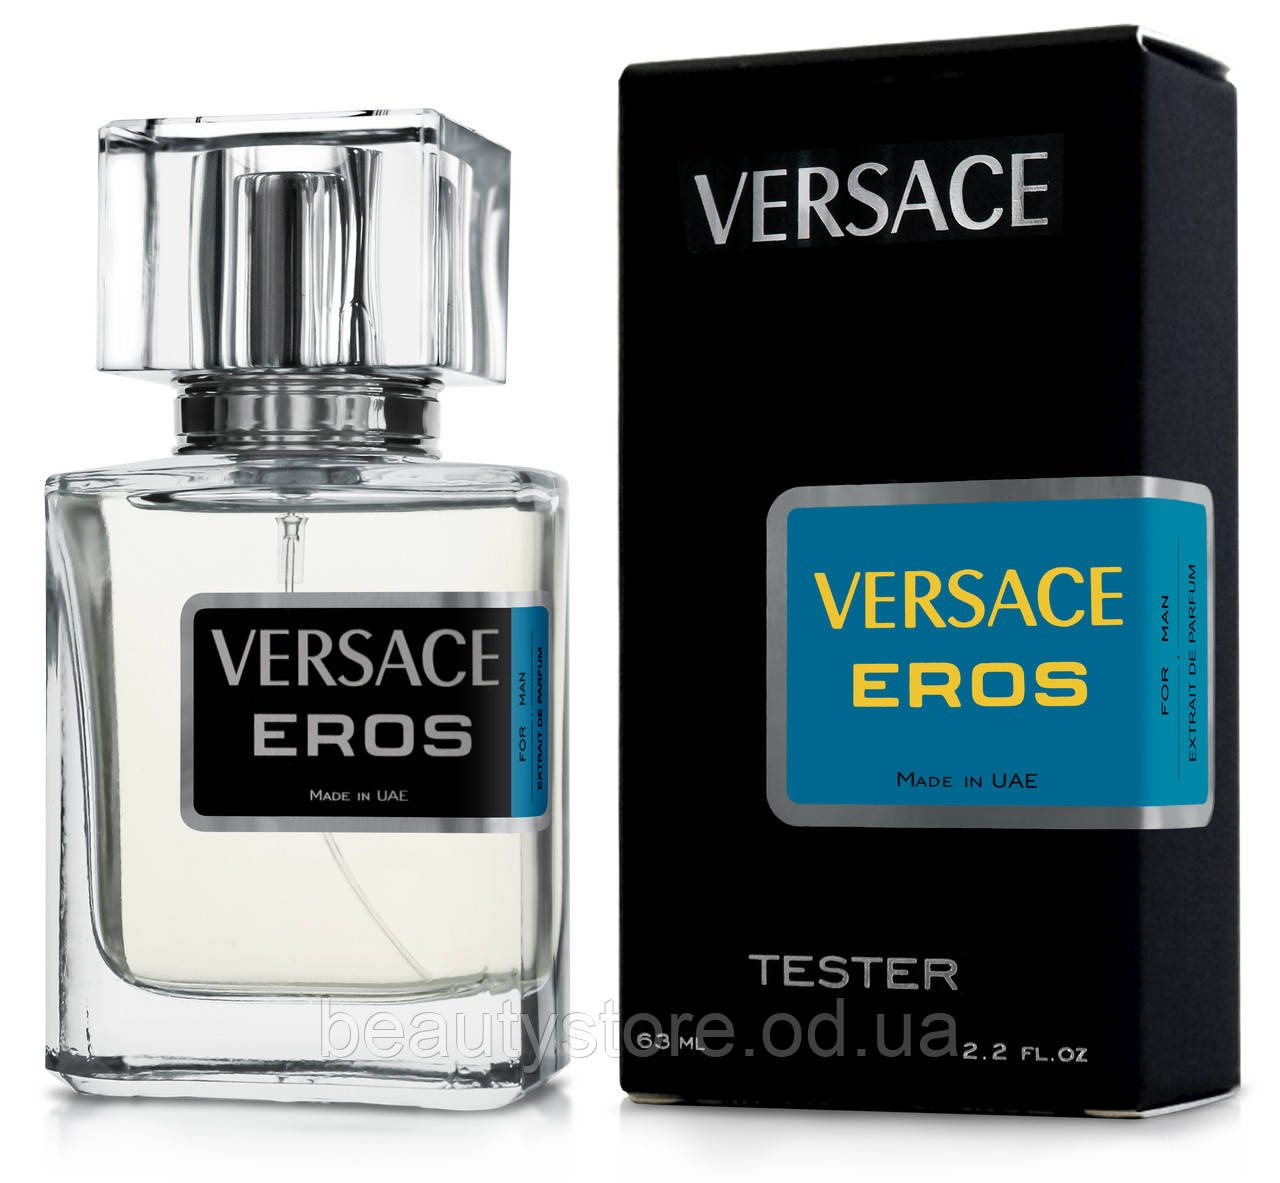 Тестер чоловічий Versace Eros, 63 мл.